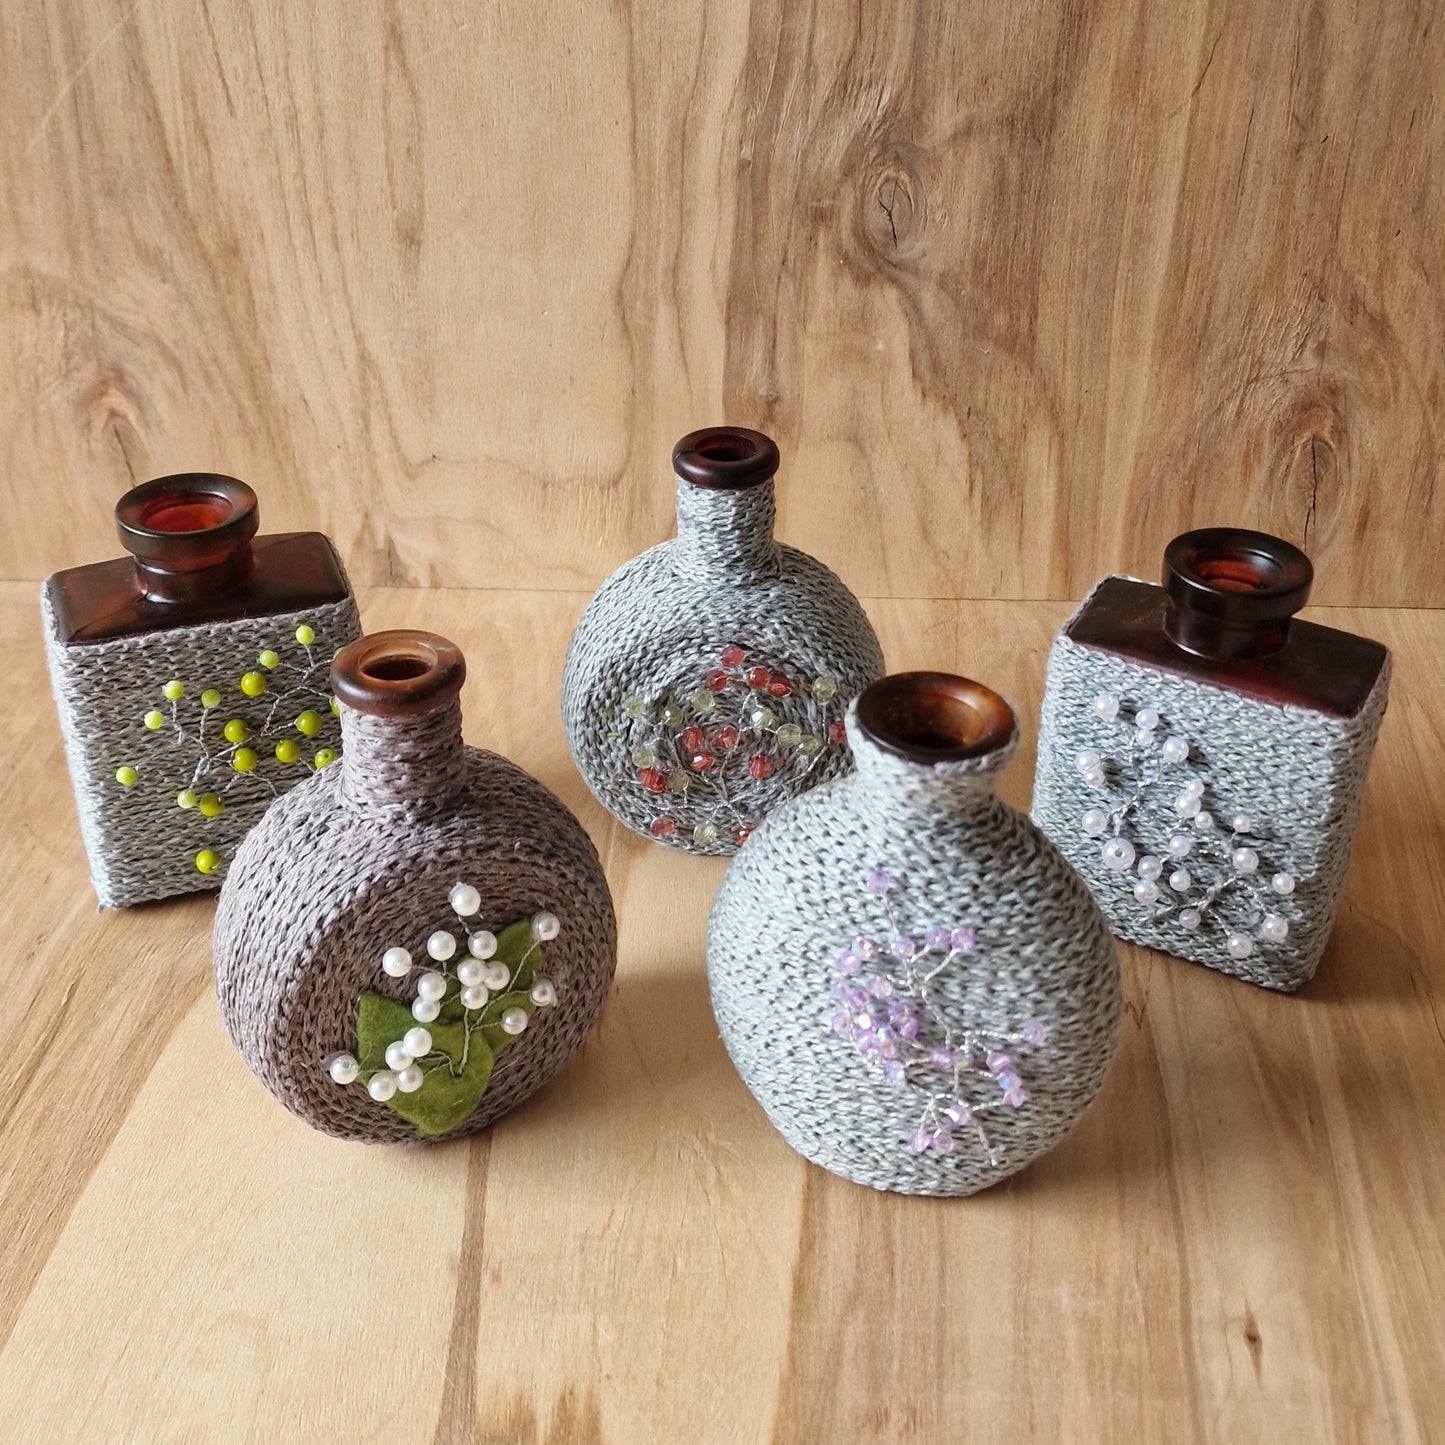 Square bottle/vase with white beads (SPKA 49)